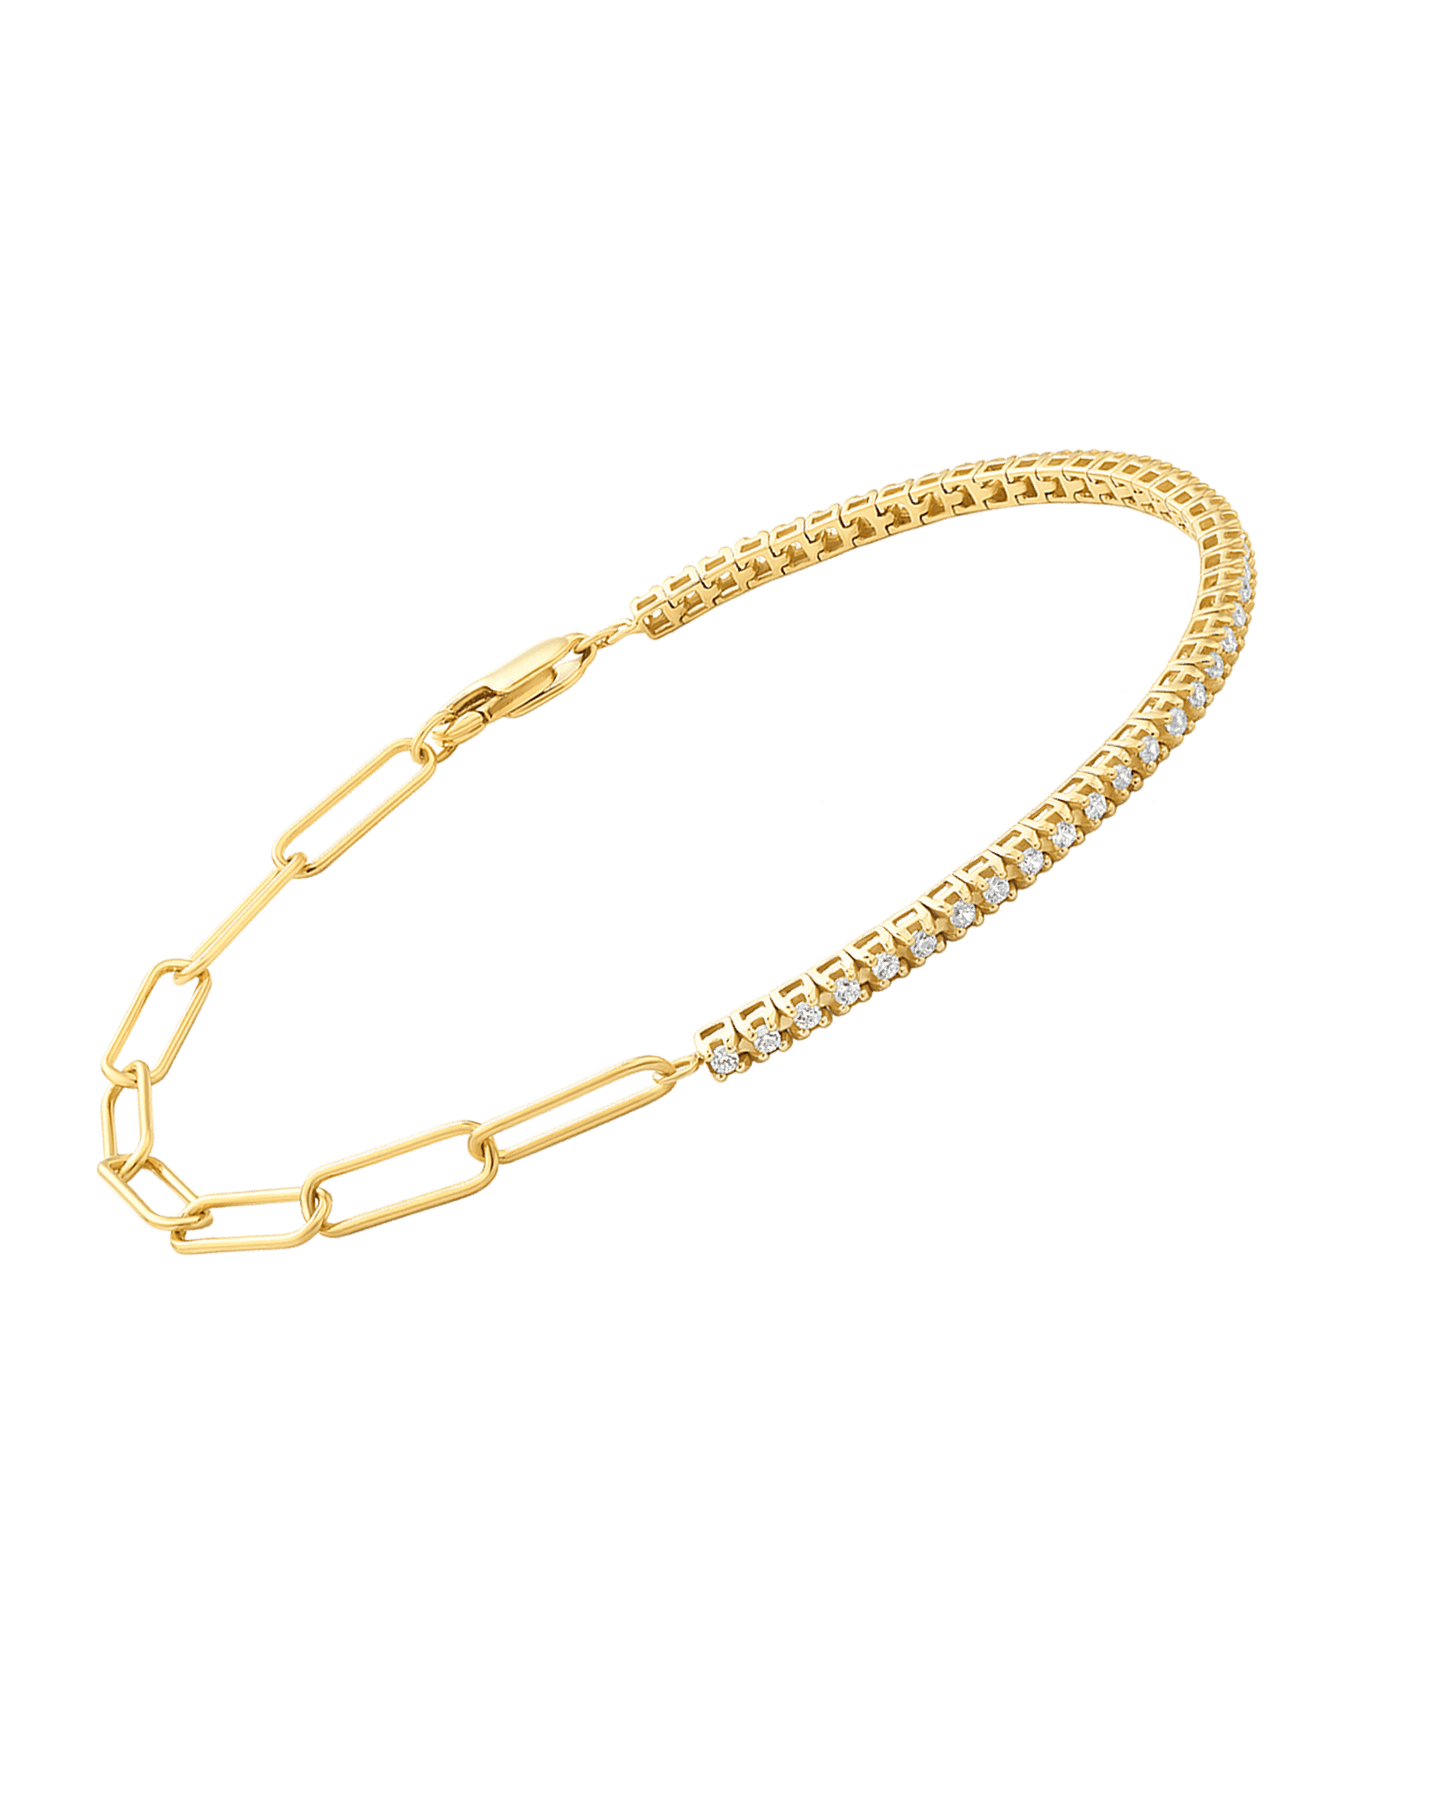 Diamond and Chain Bracelet - 14K White Gold Bracelets magal-dev 